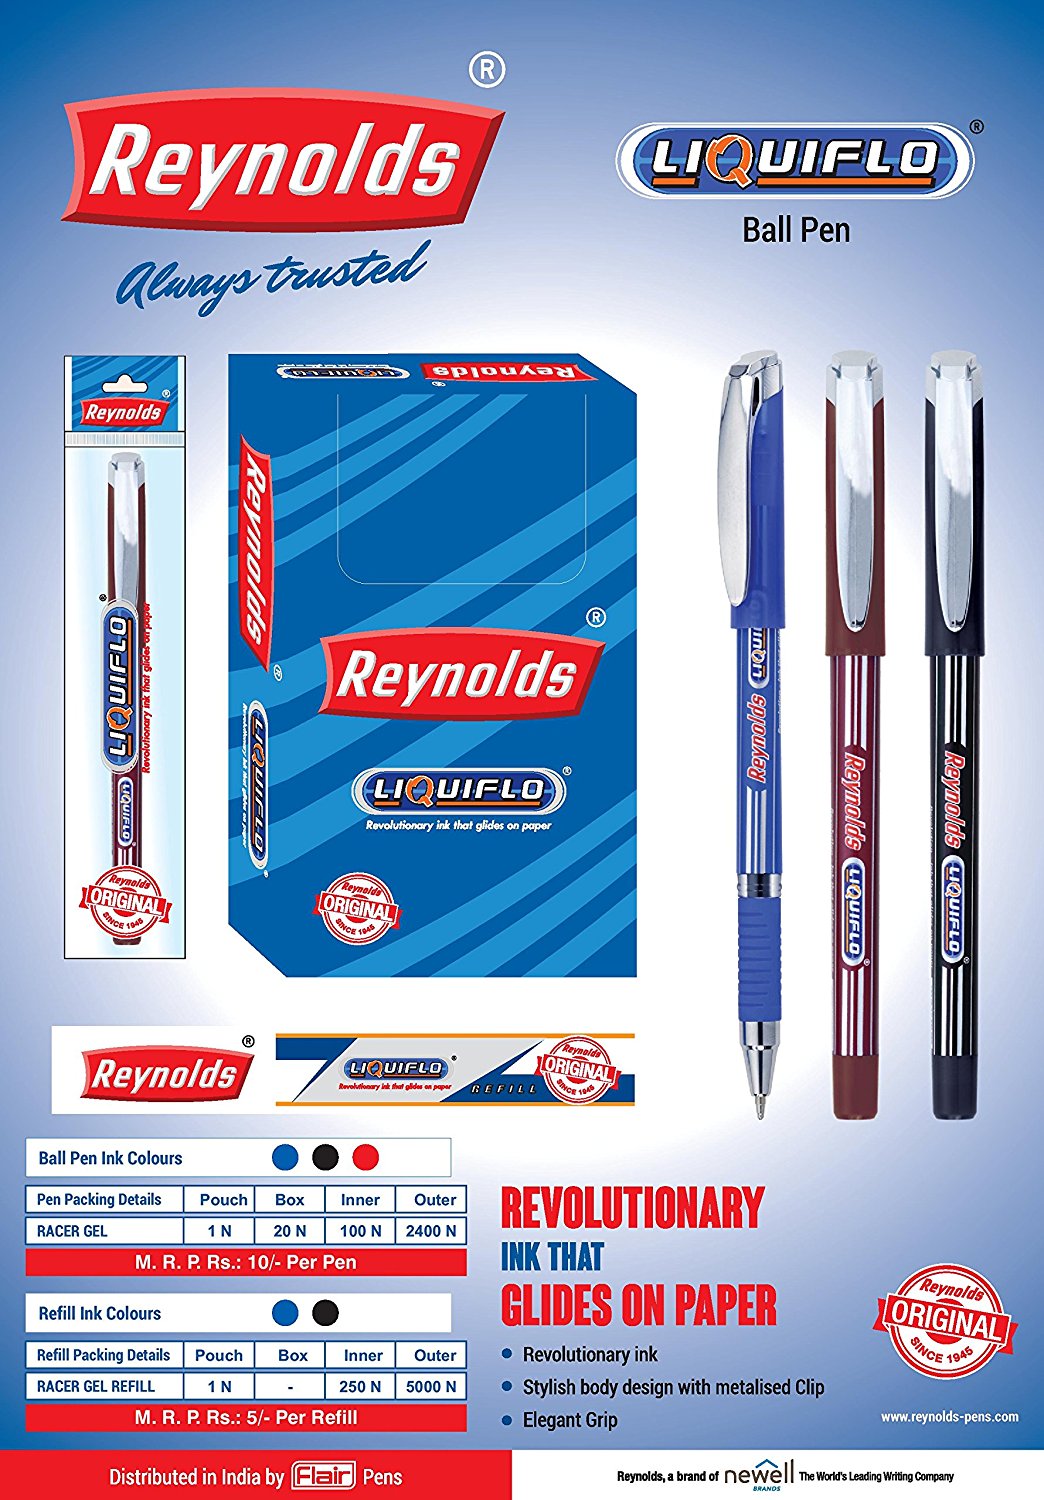 Reynolds Liquiflo Ball Pen Black (Pack of 5)